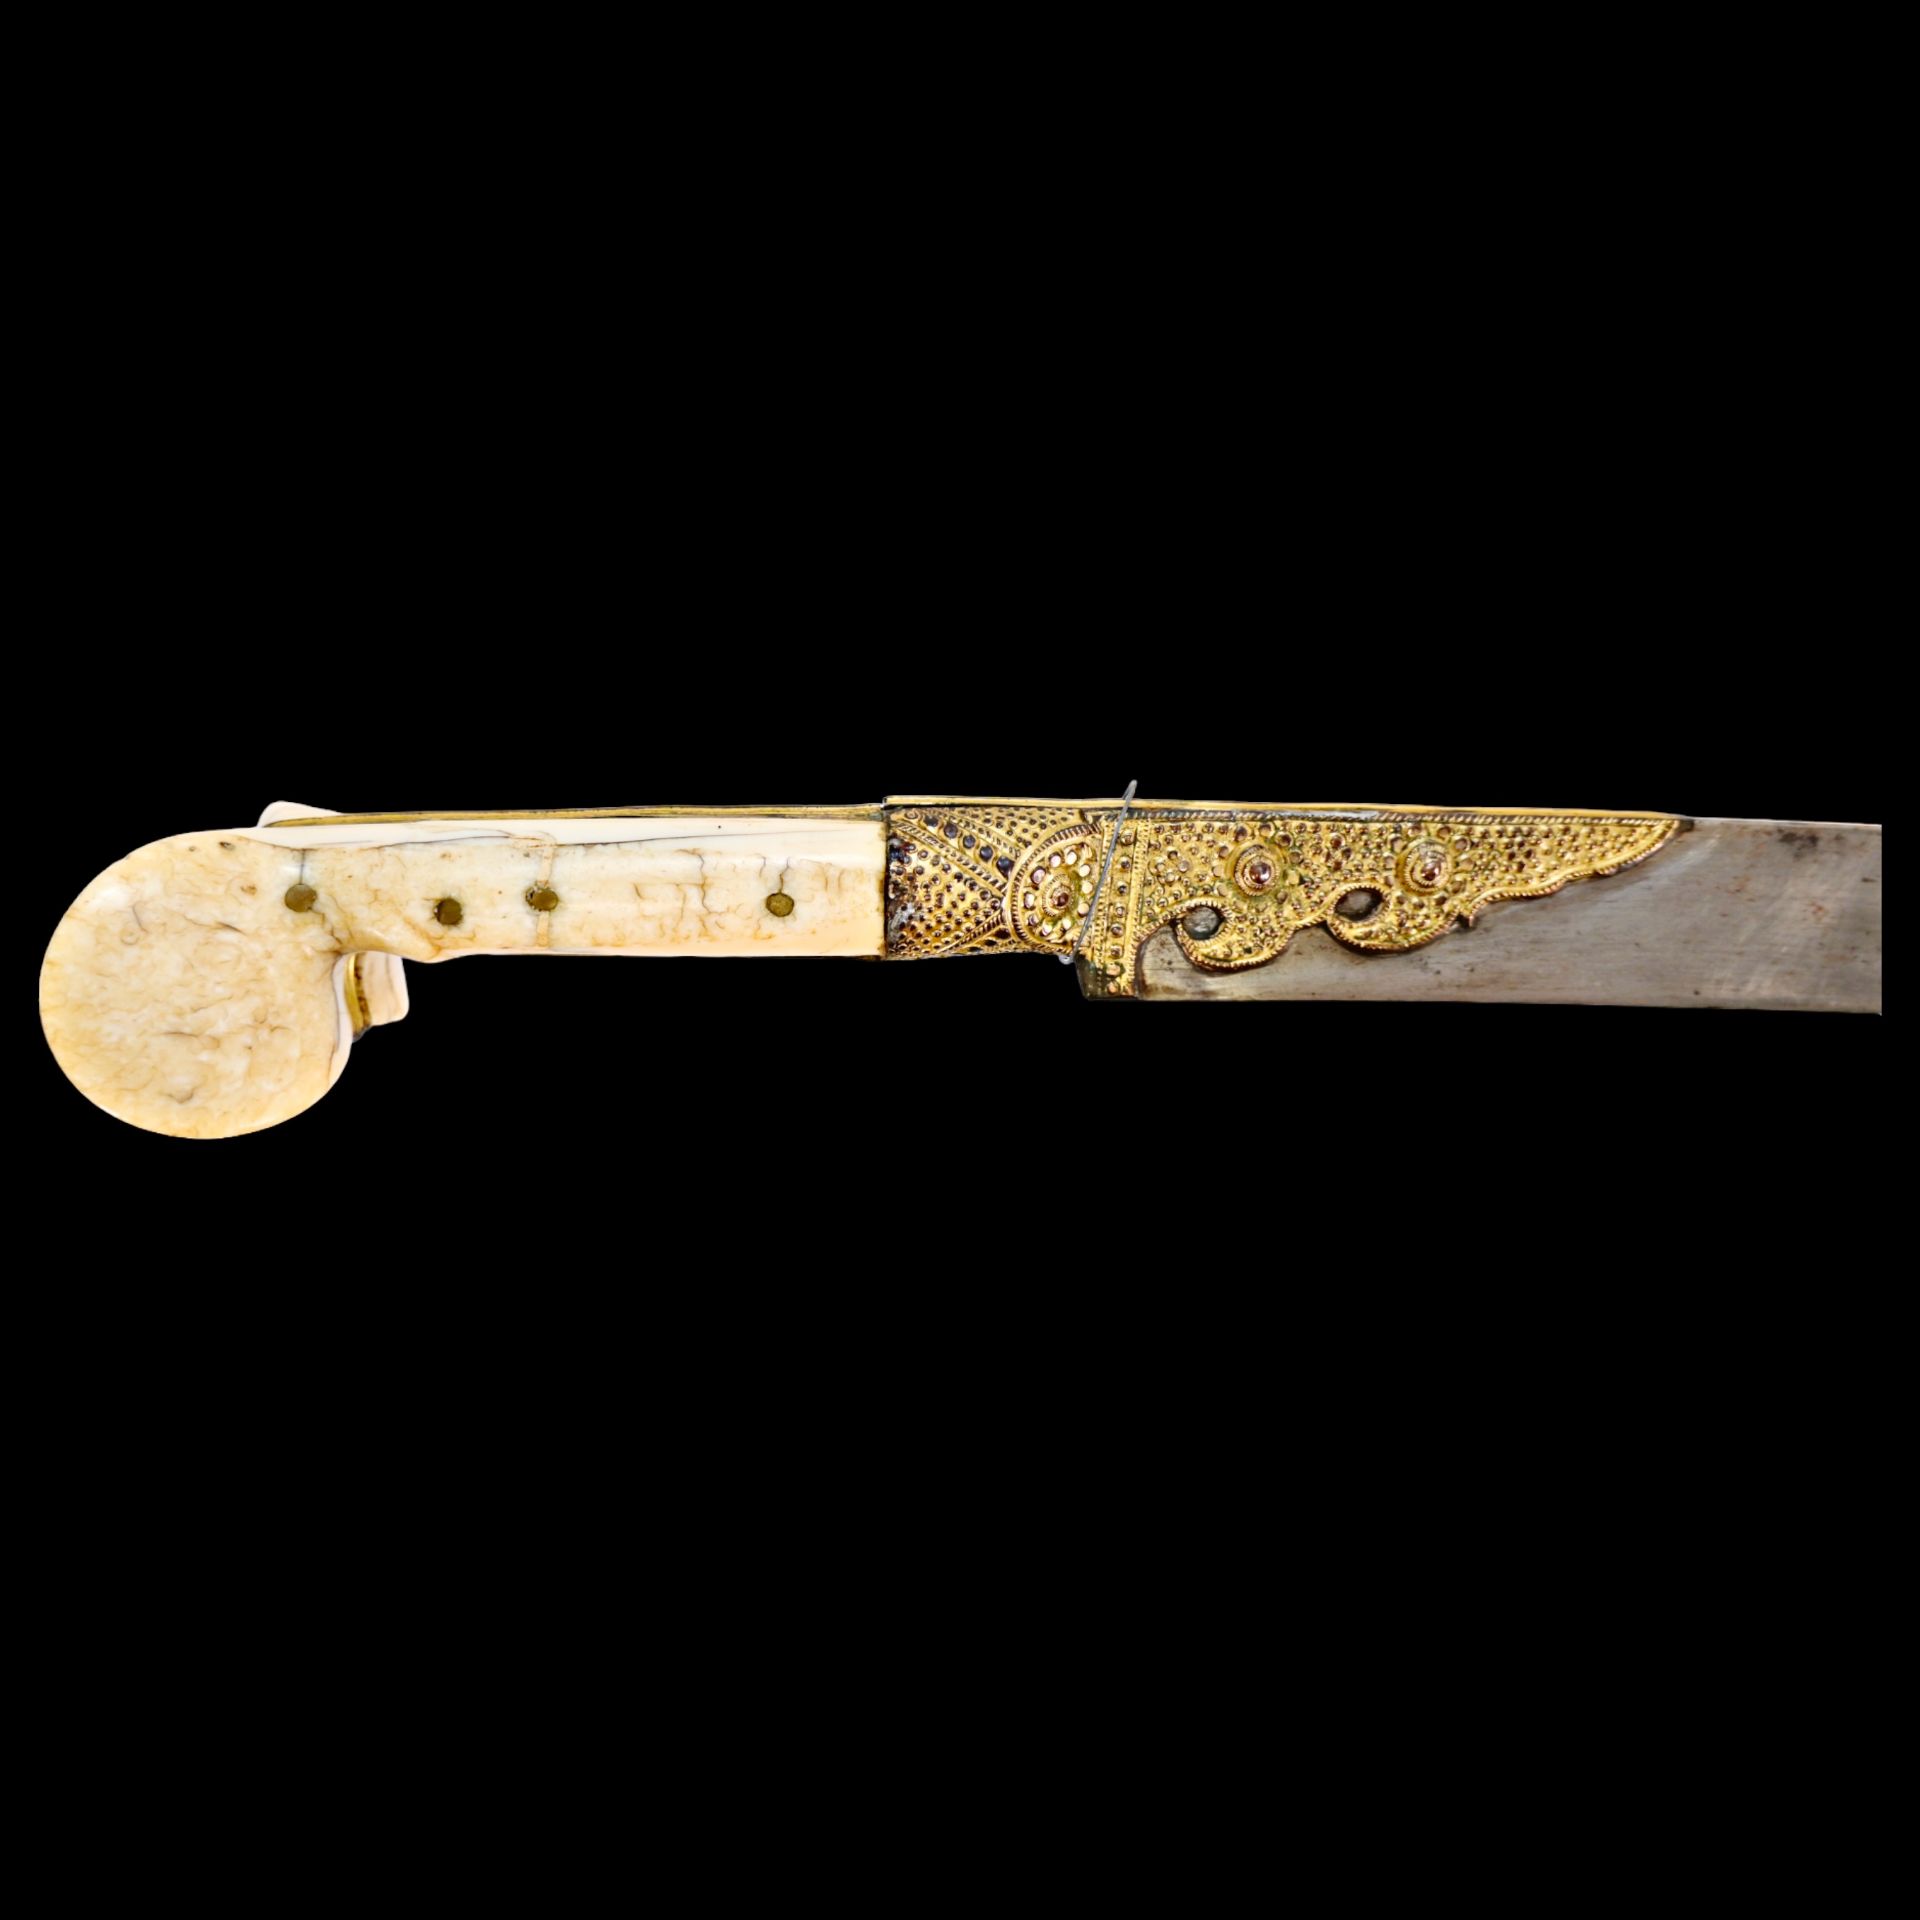 Magnificent Ottoman yatagan sword with bone hilt and gold kofgari on the blade, 1823. - Image 26 of 32